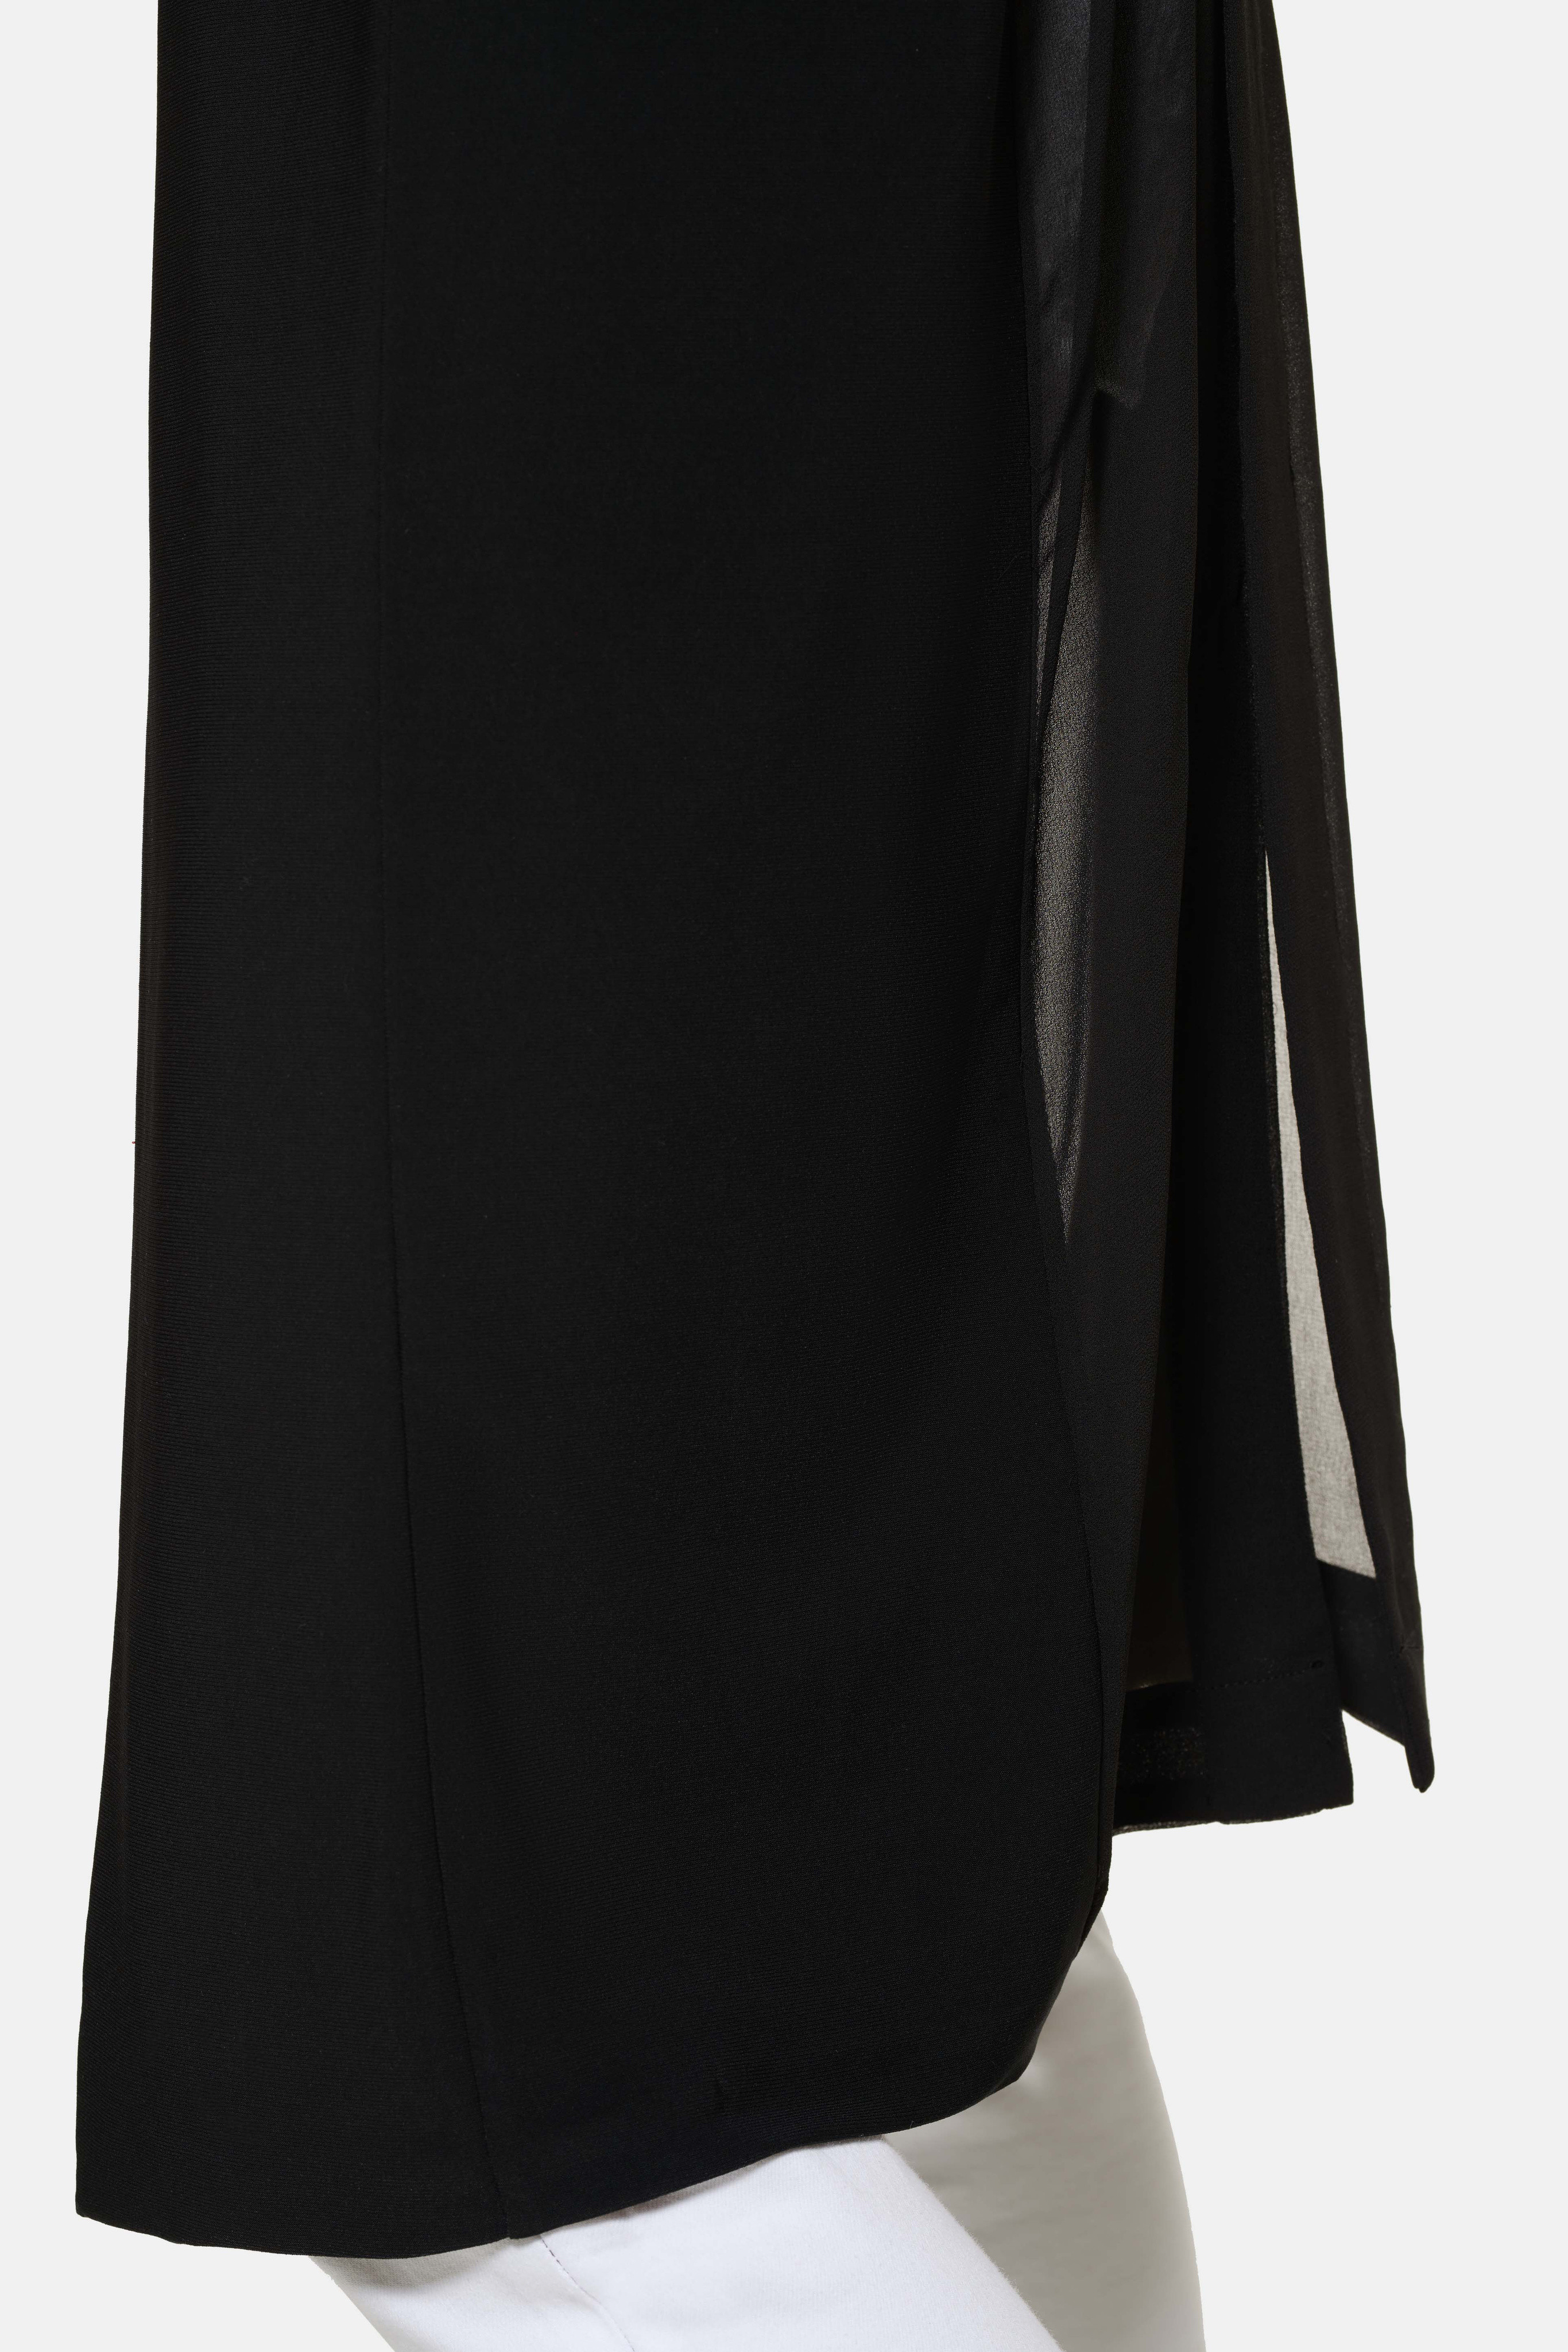 DKNY - Long cardigan with chiffon back, Black, large image number 2